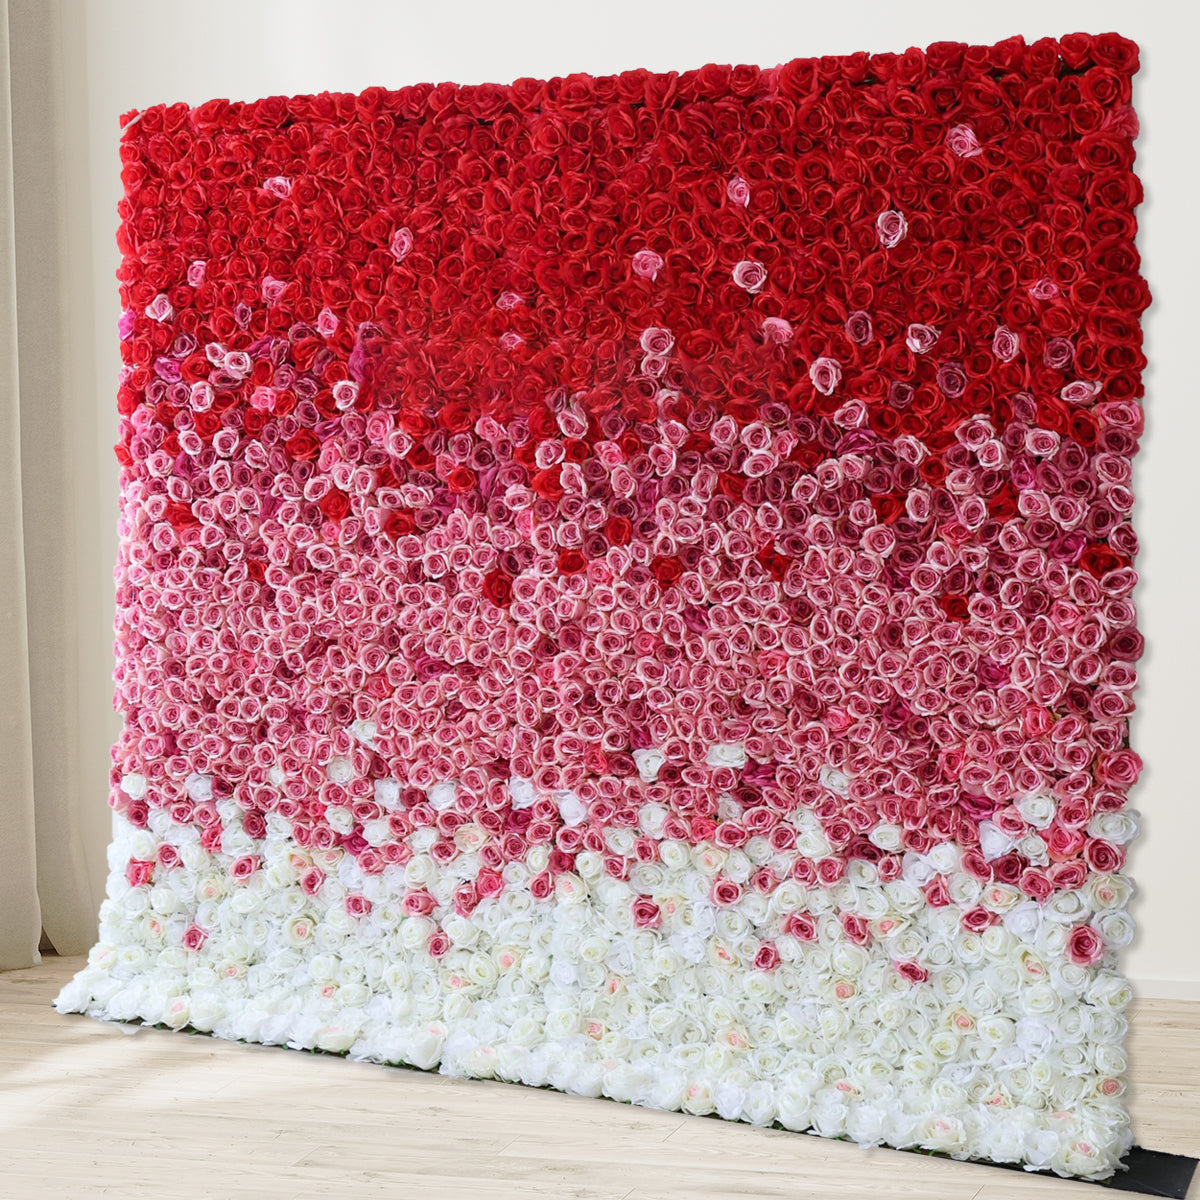 3D Artificial Flower Wall Arrangement Wedding Party Birthday Backdrop Decor HQ1338